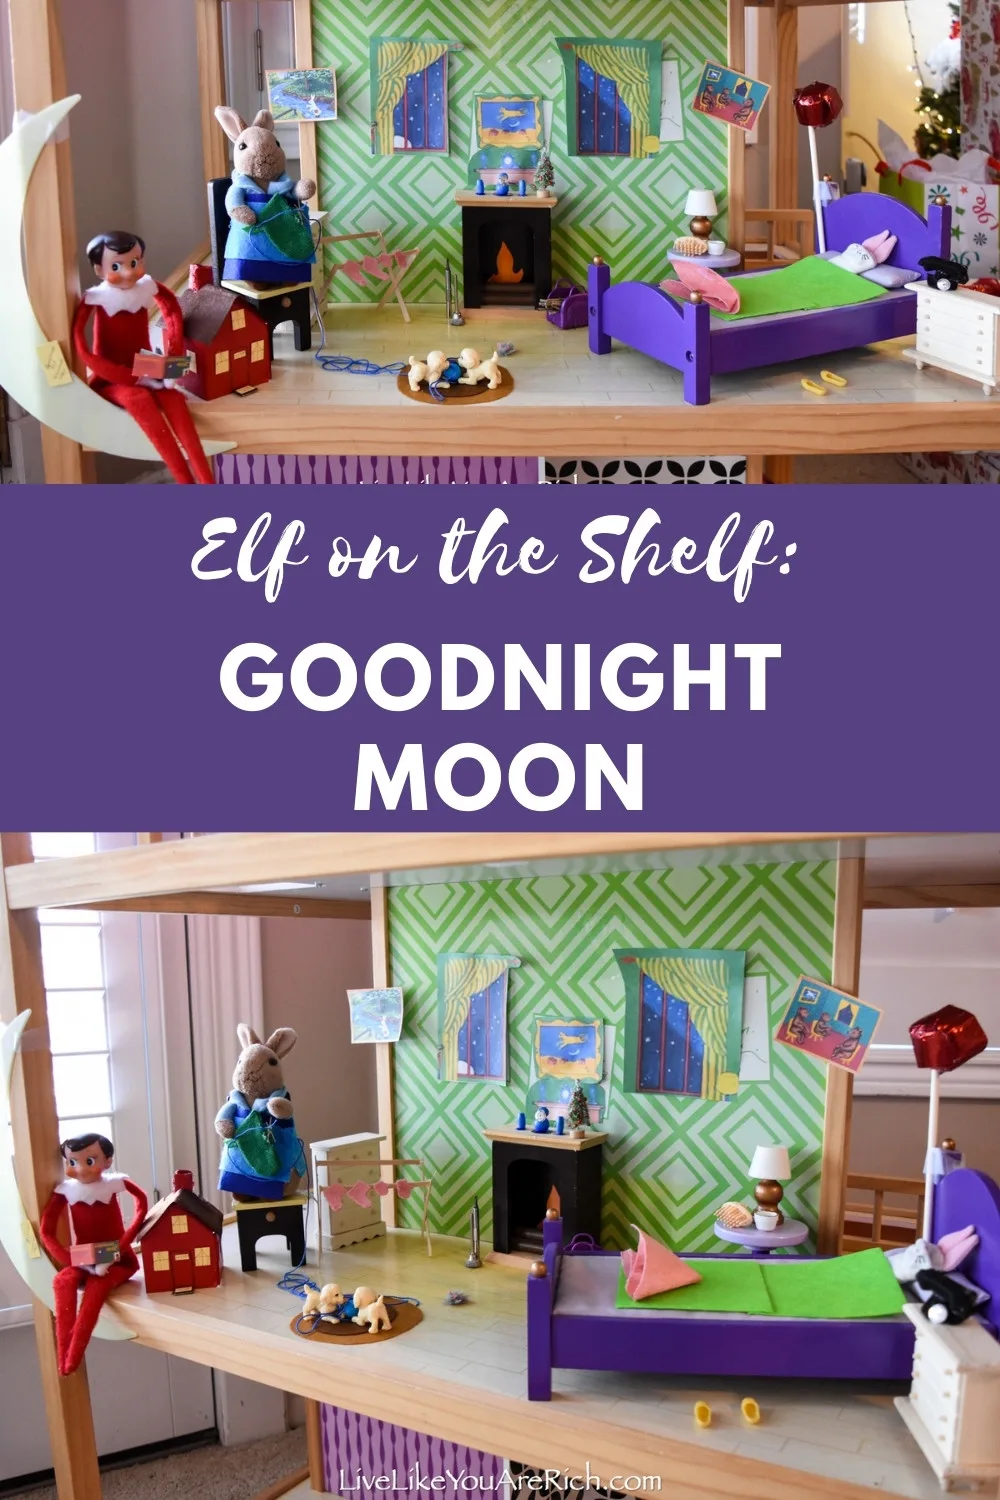 Elf on the Shelf: Goodnight Moon